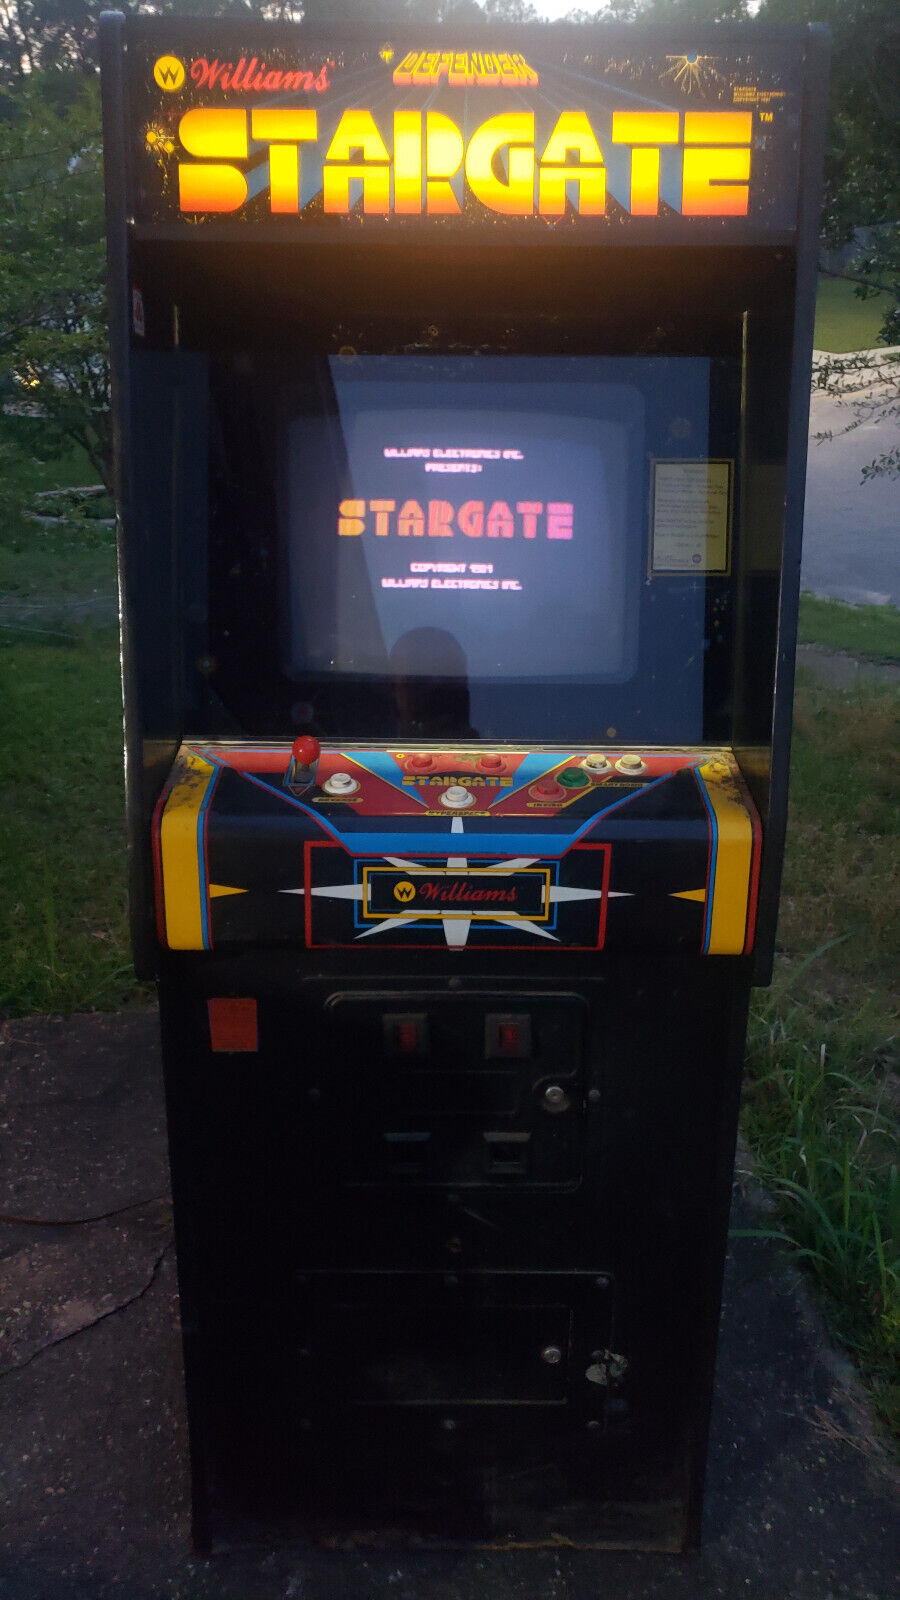 Stargate Arcade Machine Original Coin Op 1981 Williams Defender II - WORKING CRT